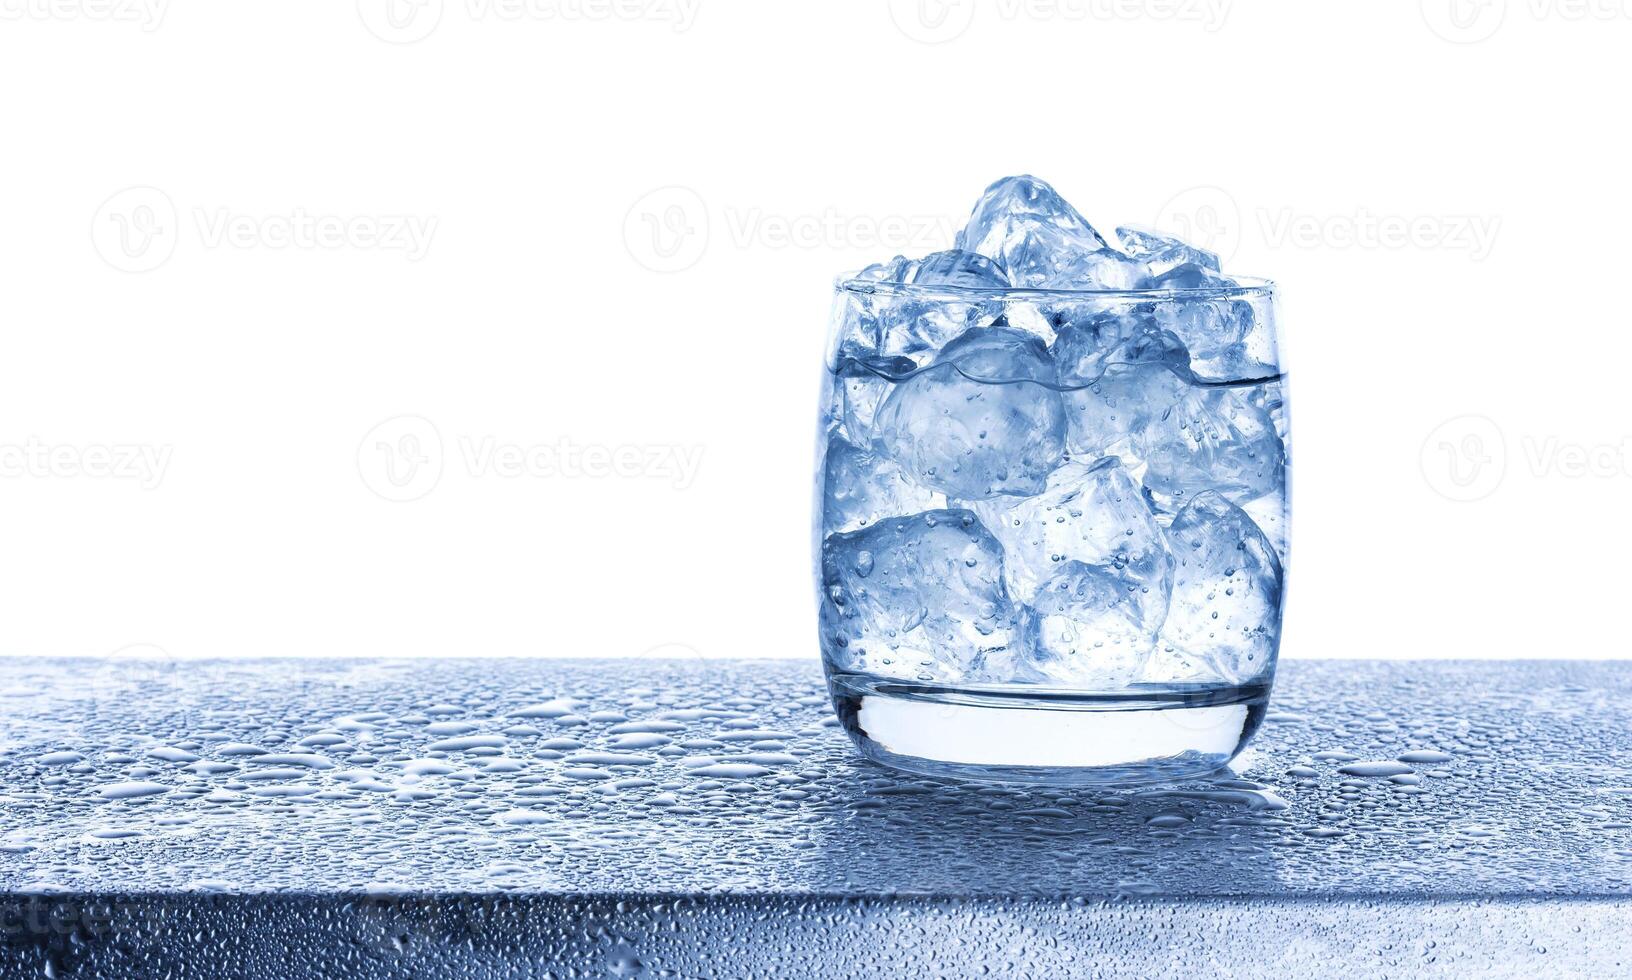 vatten med krossad is kuber i glas på vit bakgrund foto